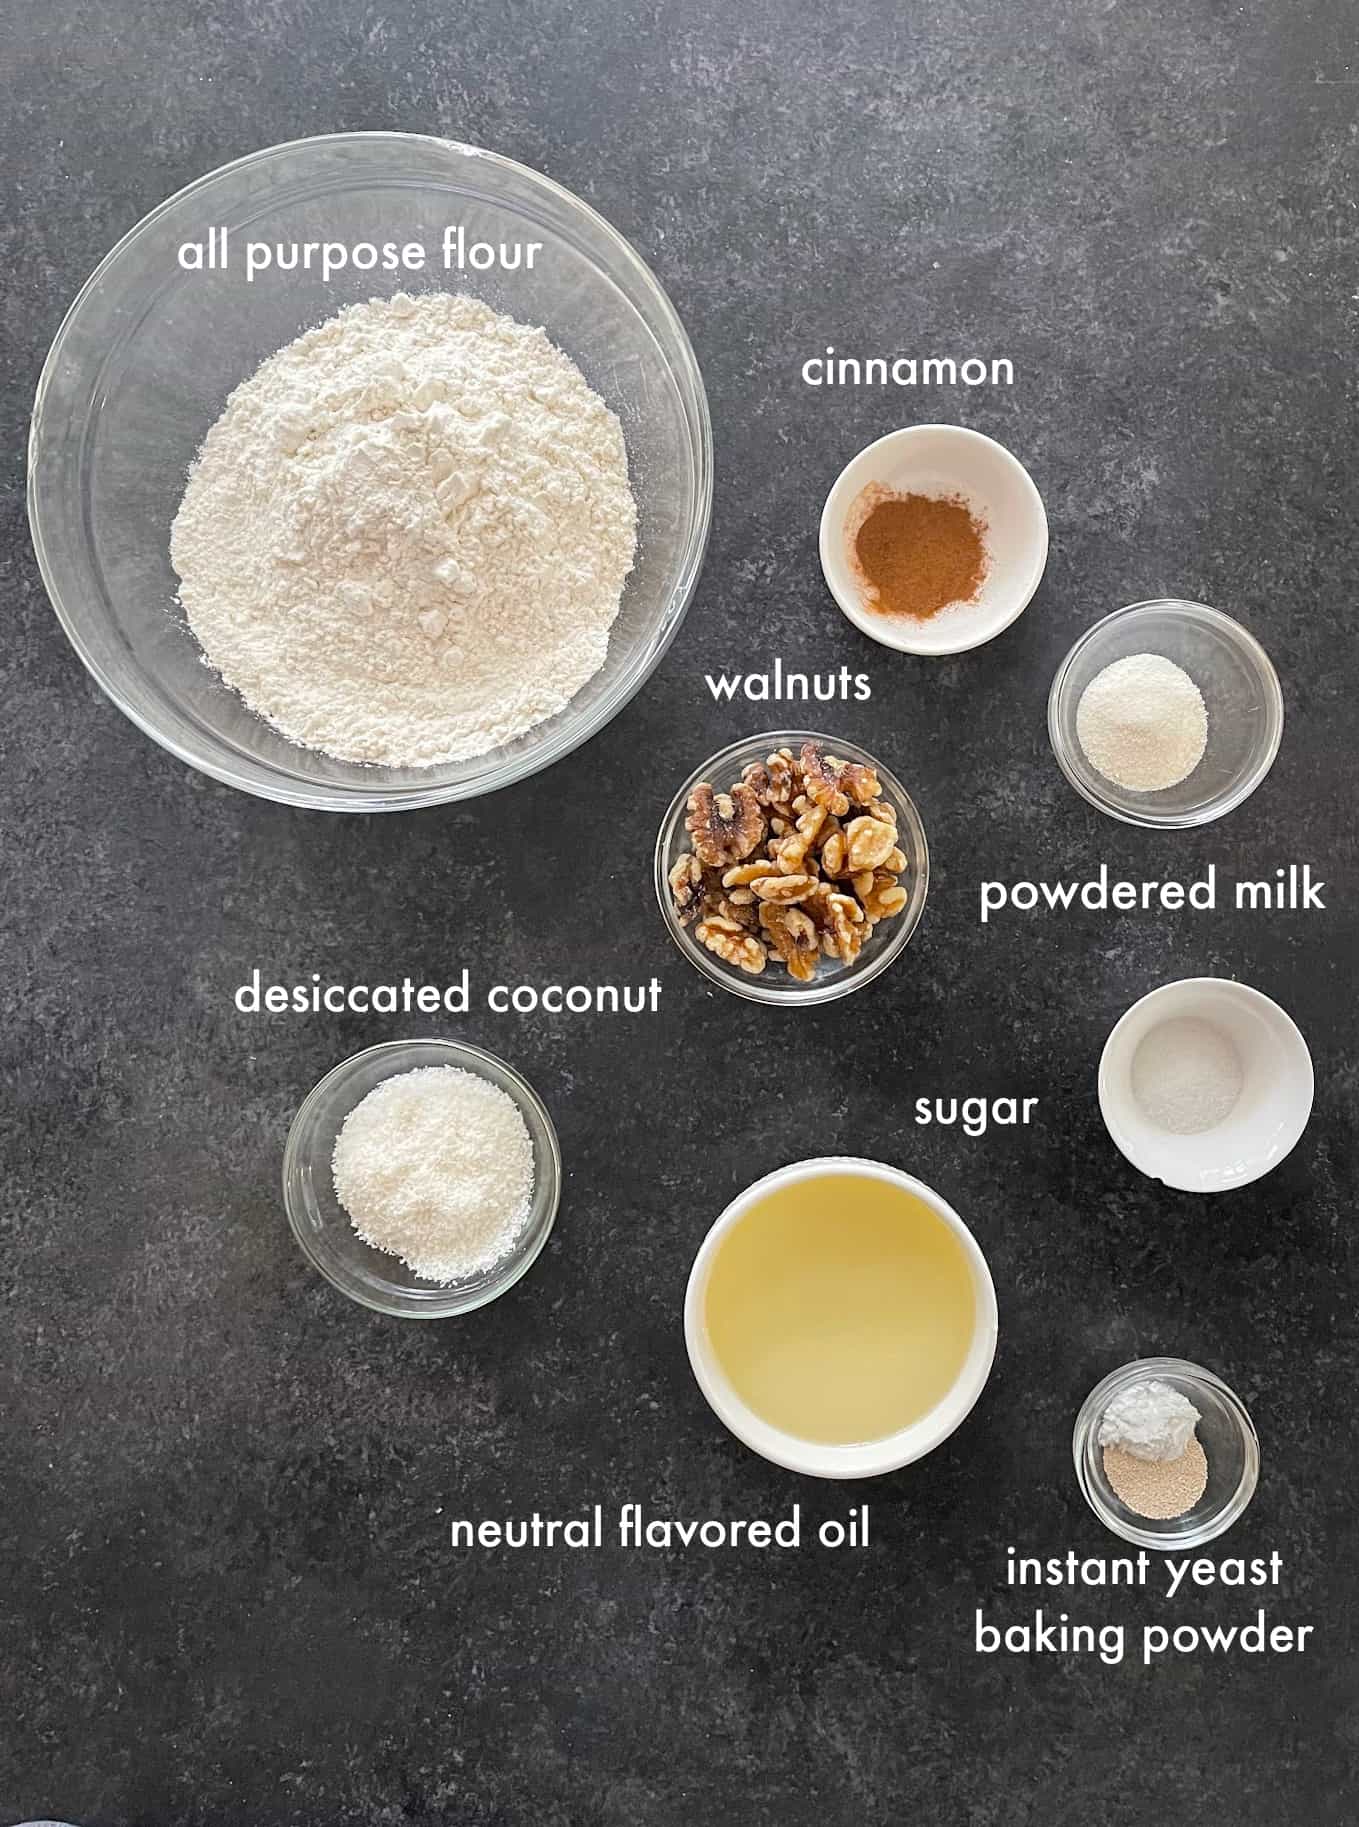 to make atayef or qatayef you need flour, yeast, sugar, baking powder, water, walnuts, cinnamon and oil. 